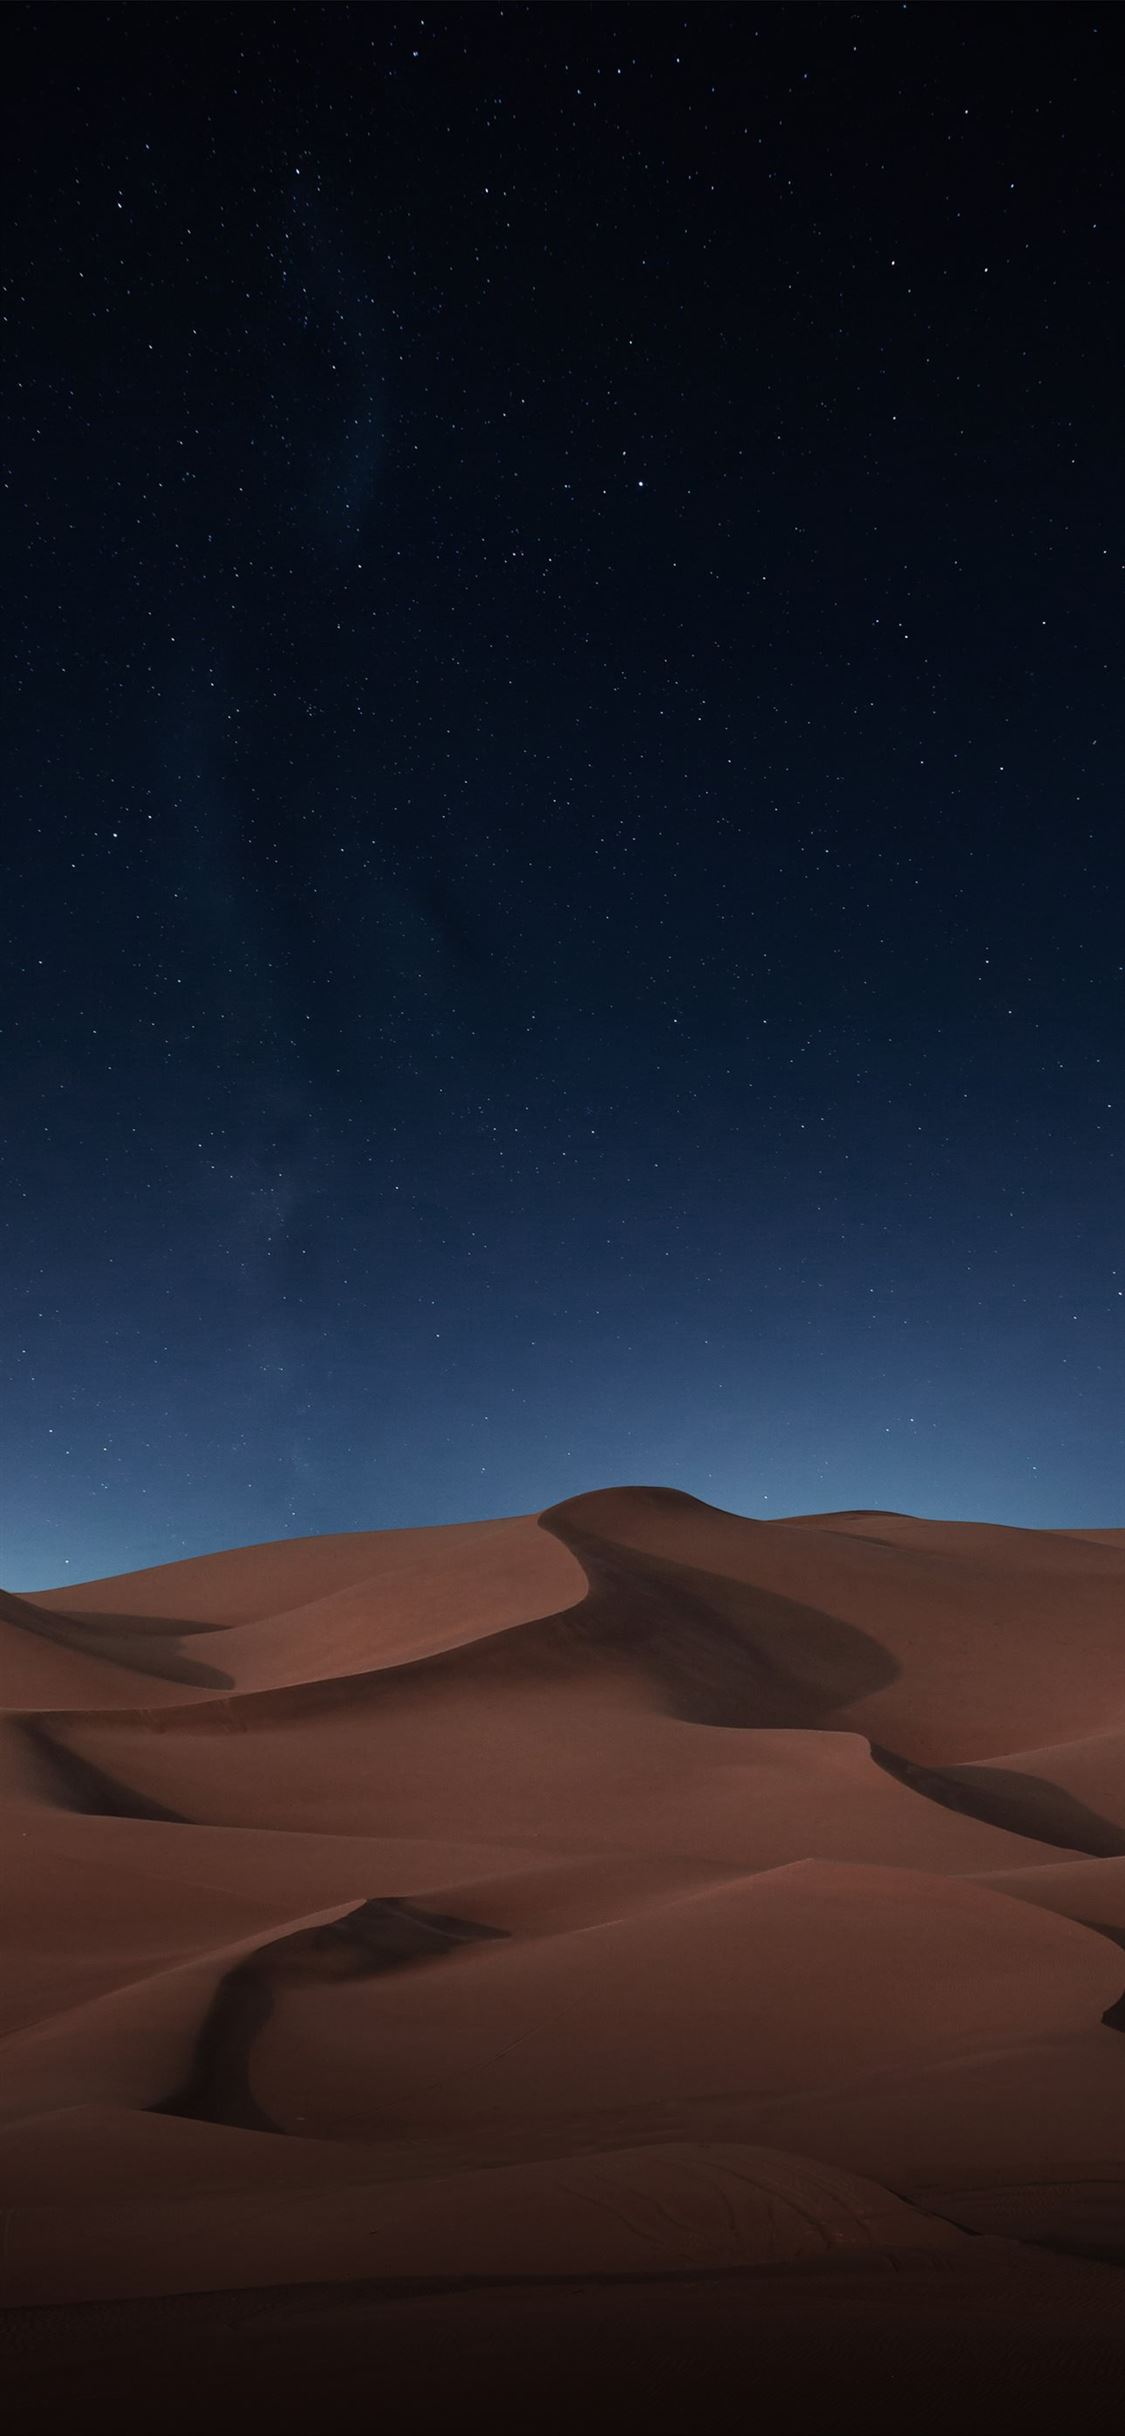 desert night 4k iPhone wallpaper